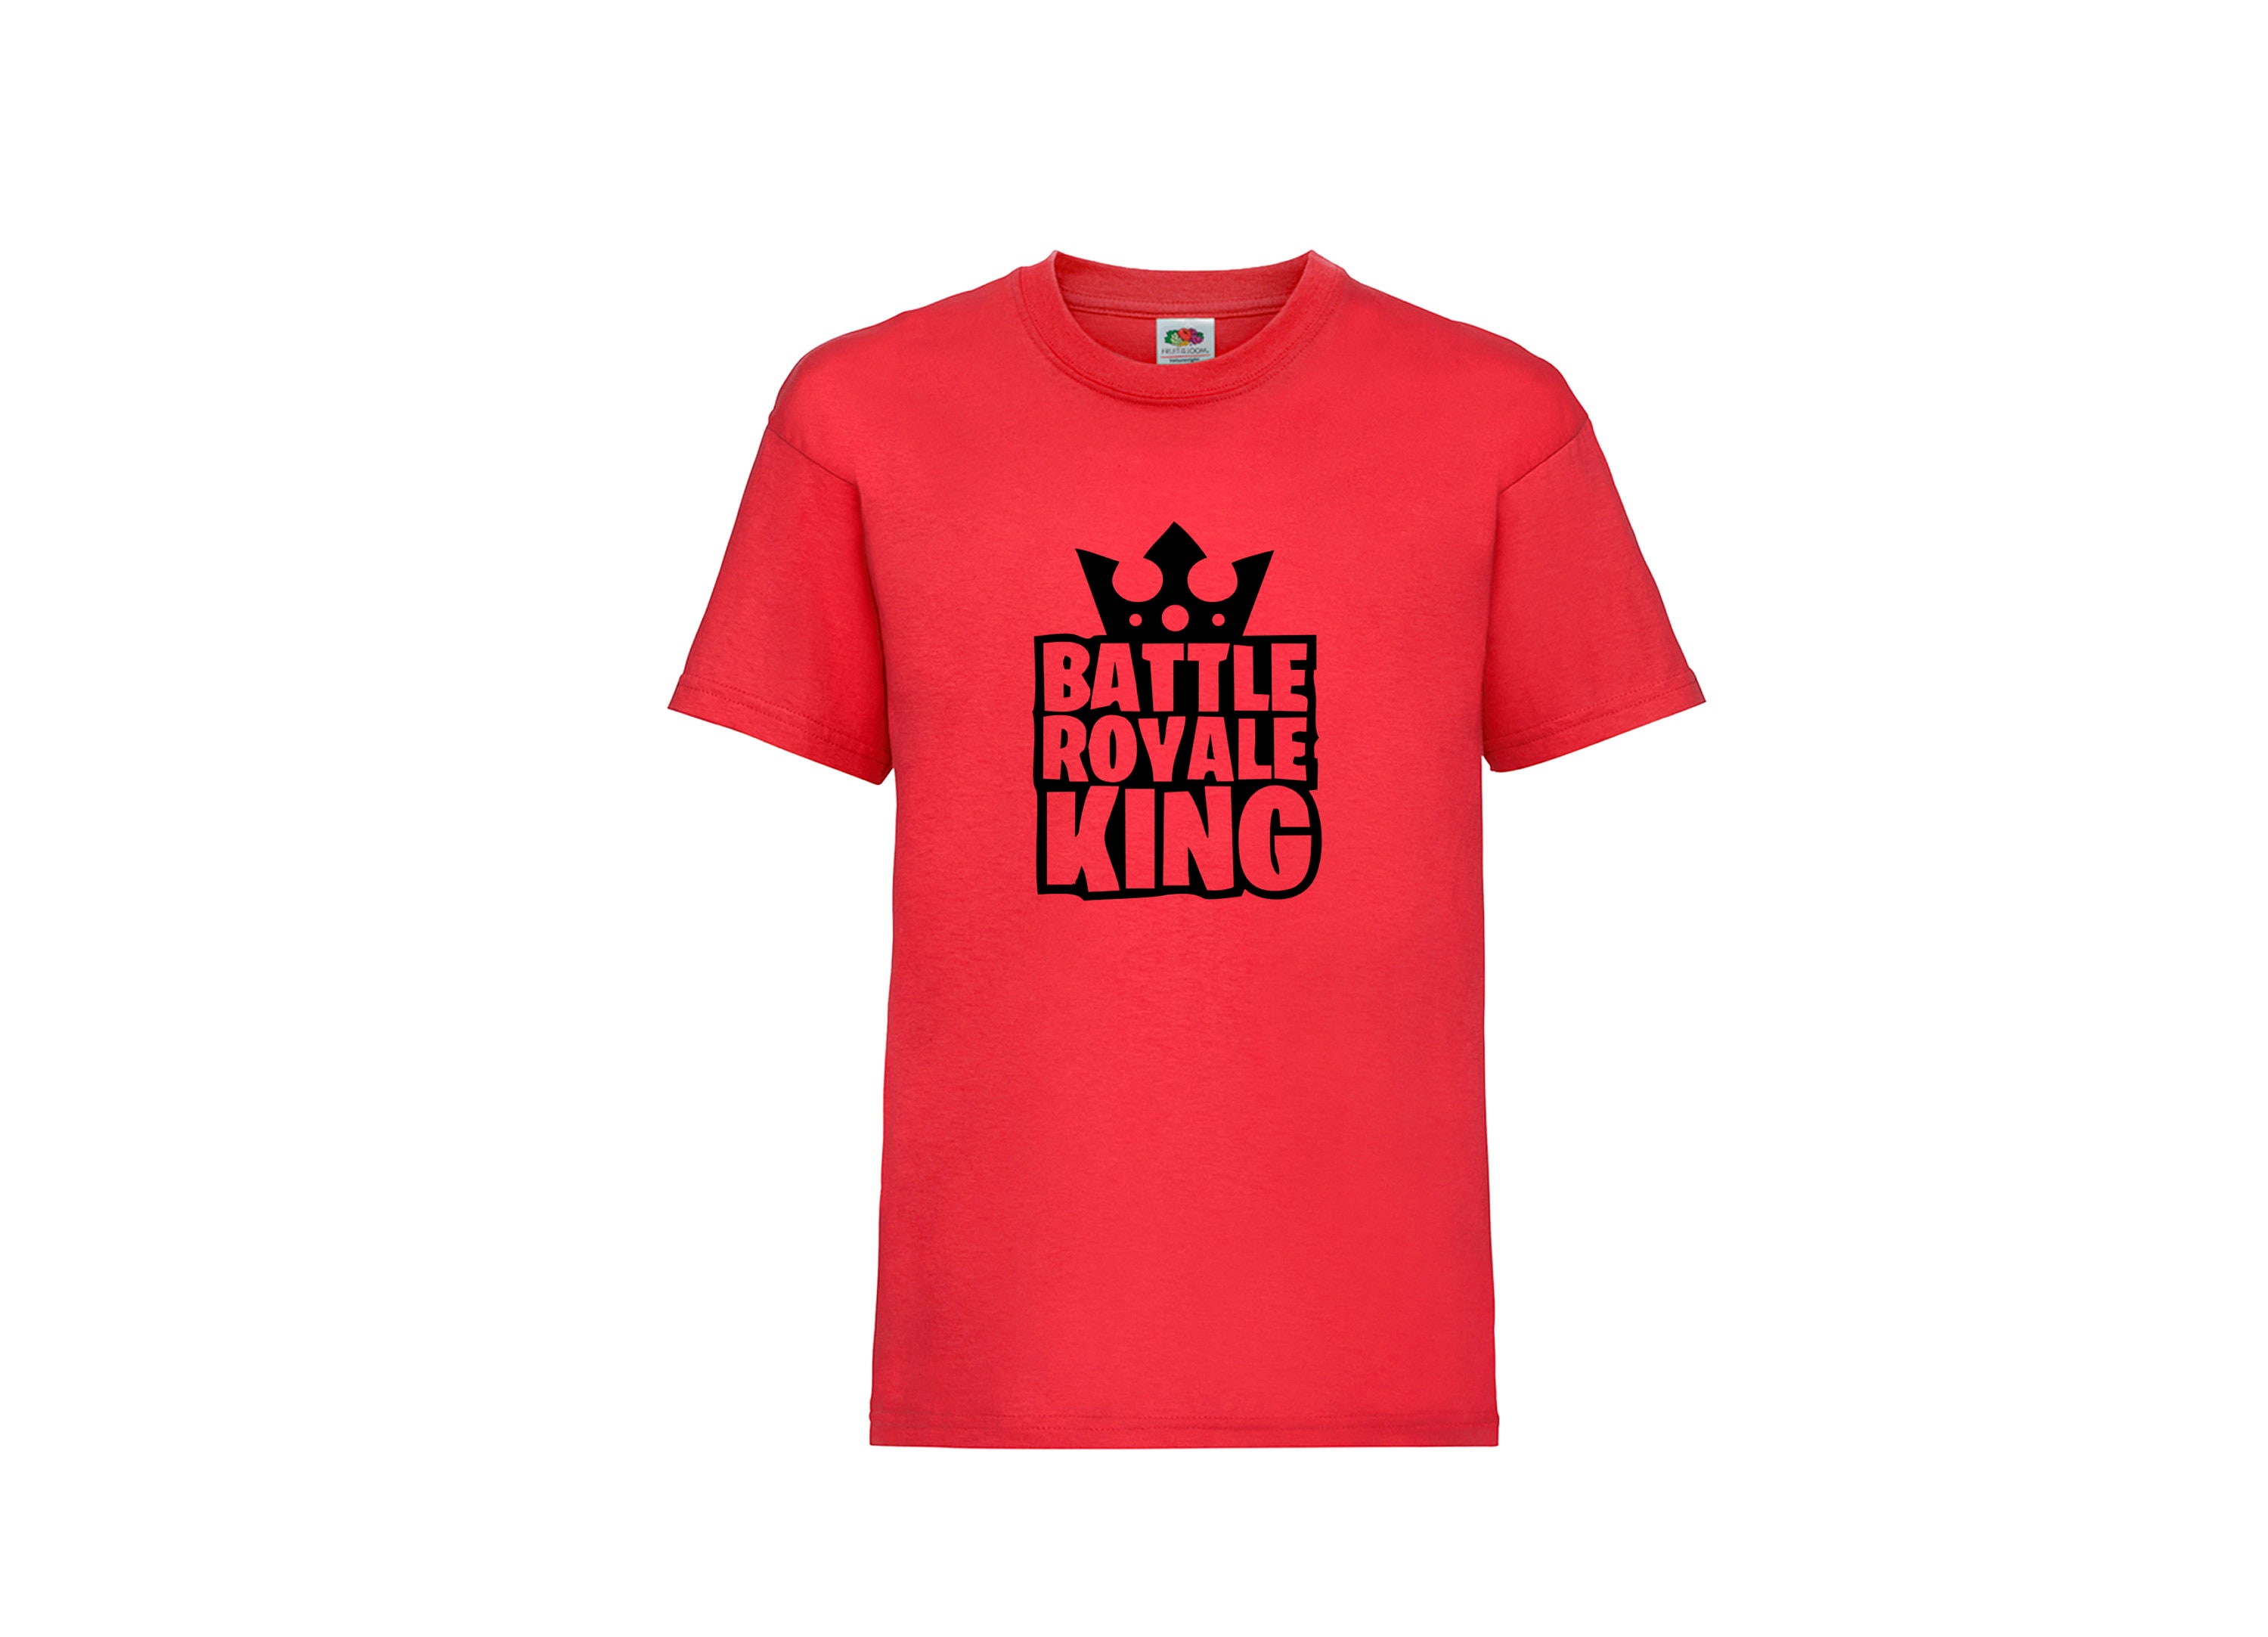 Gold Print Kids Battle Royal King T shirt Top T-Shirt Short Sleeve Unisex Summer Tshirt Boys Girls Birthday Gift Present Suspect Top